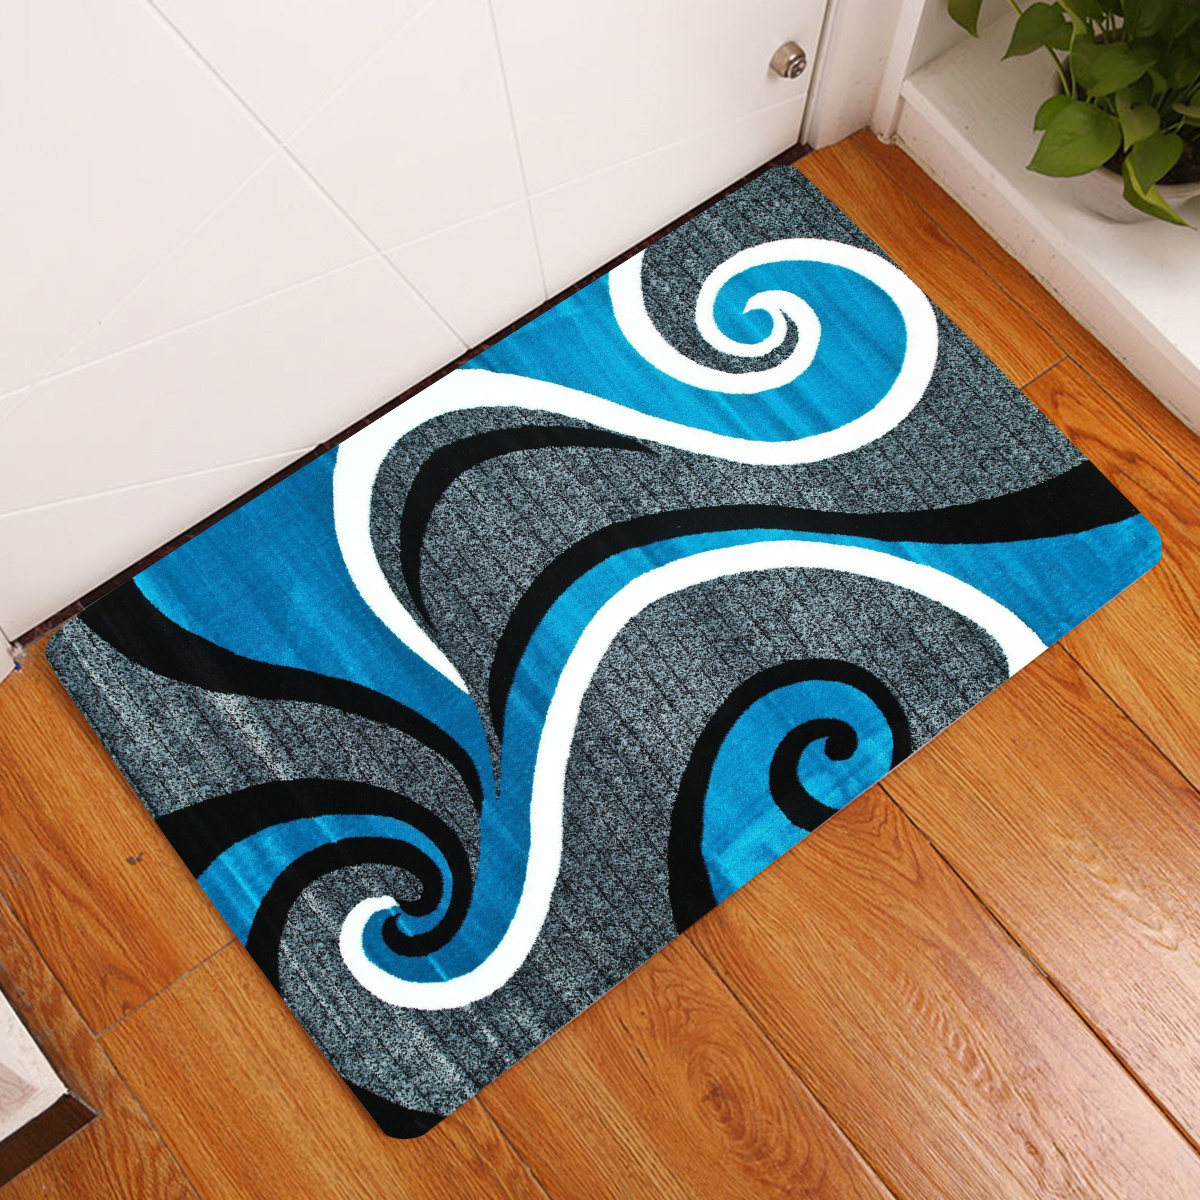 Anti-Slip Kitchen Carpet Black White Marble Sea Wave Printed Entrance  Doormat Floor Mats Carpets for Living Room Bathroom Mat Home Decor